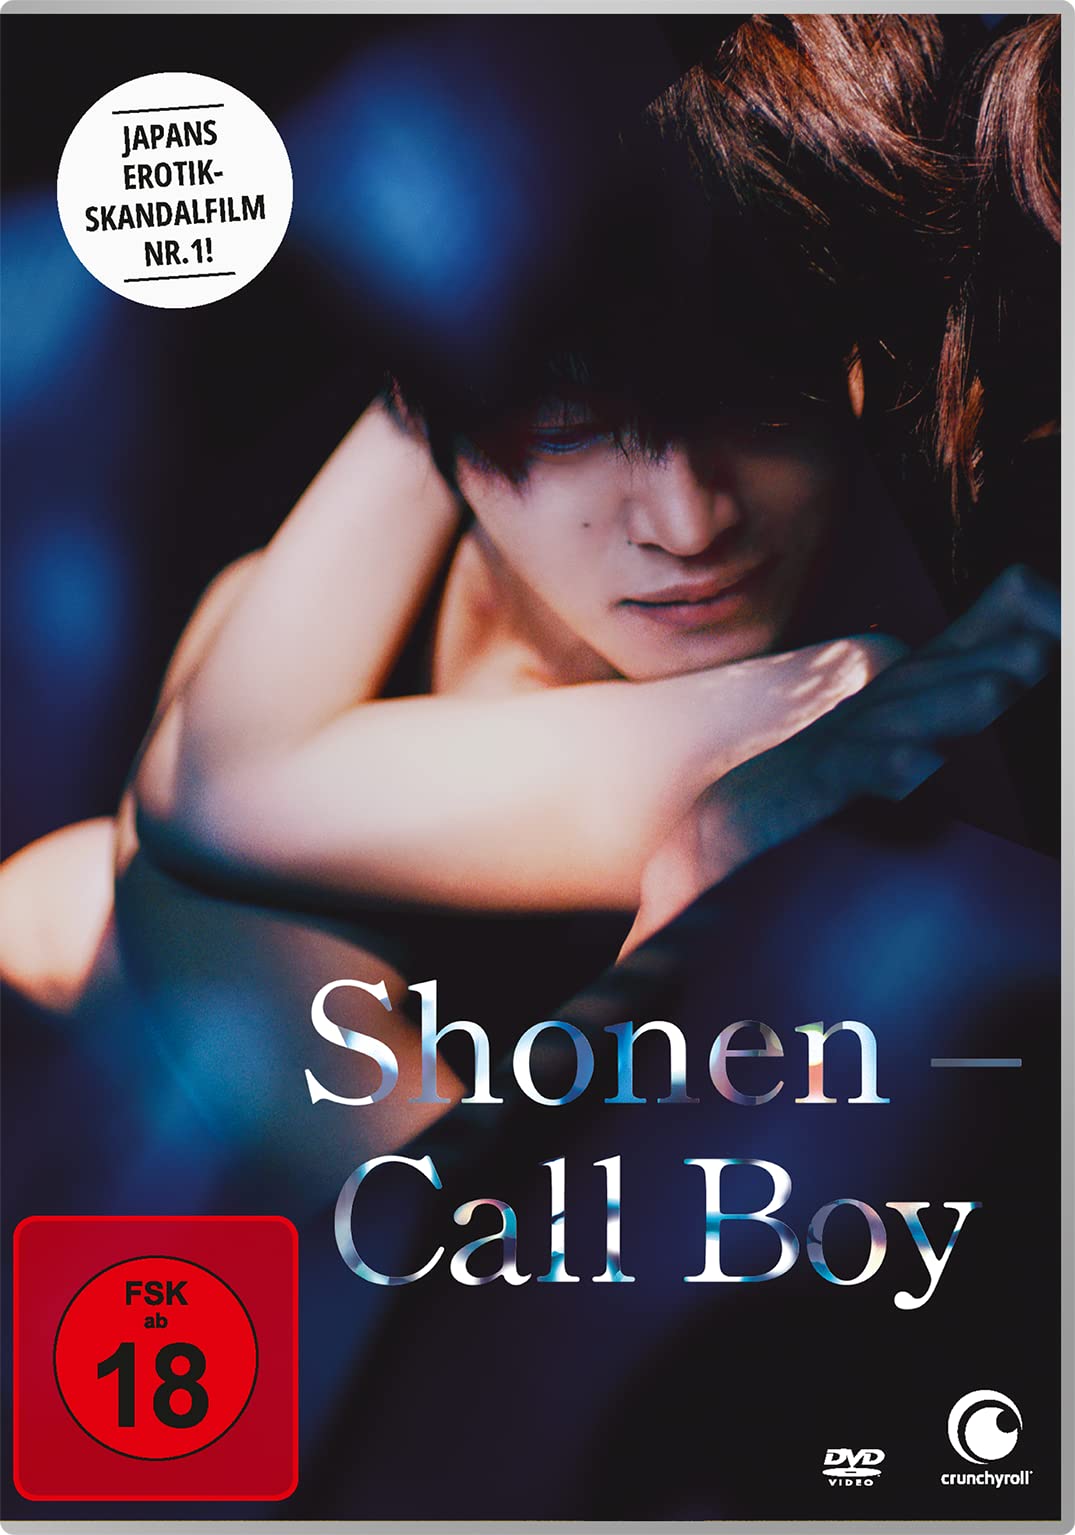 Shonen - Call Boy in Blu Ray - Shonen - Call Boy - - FILMSTARTS.de